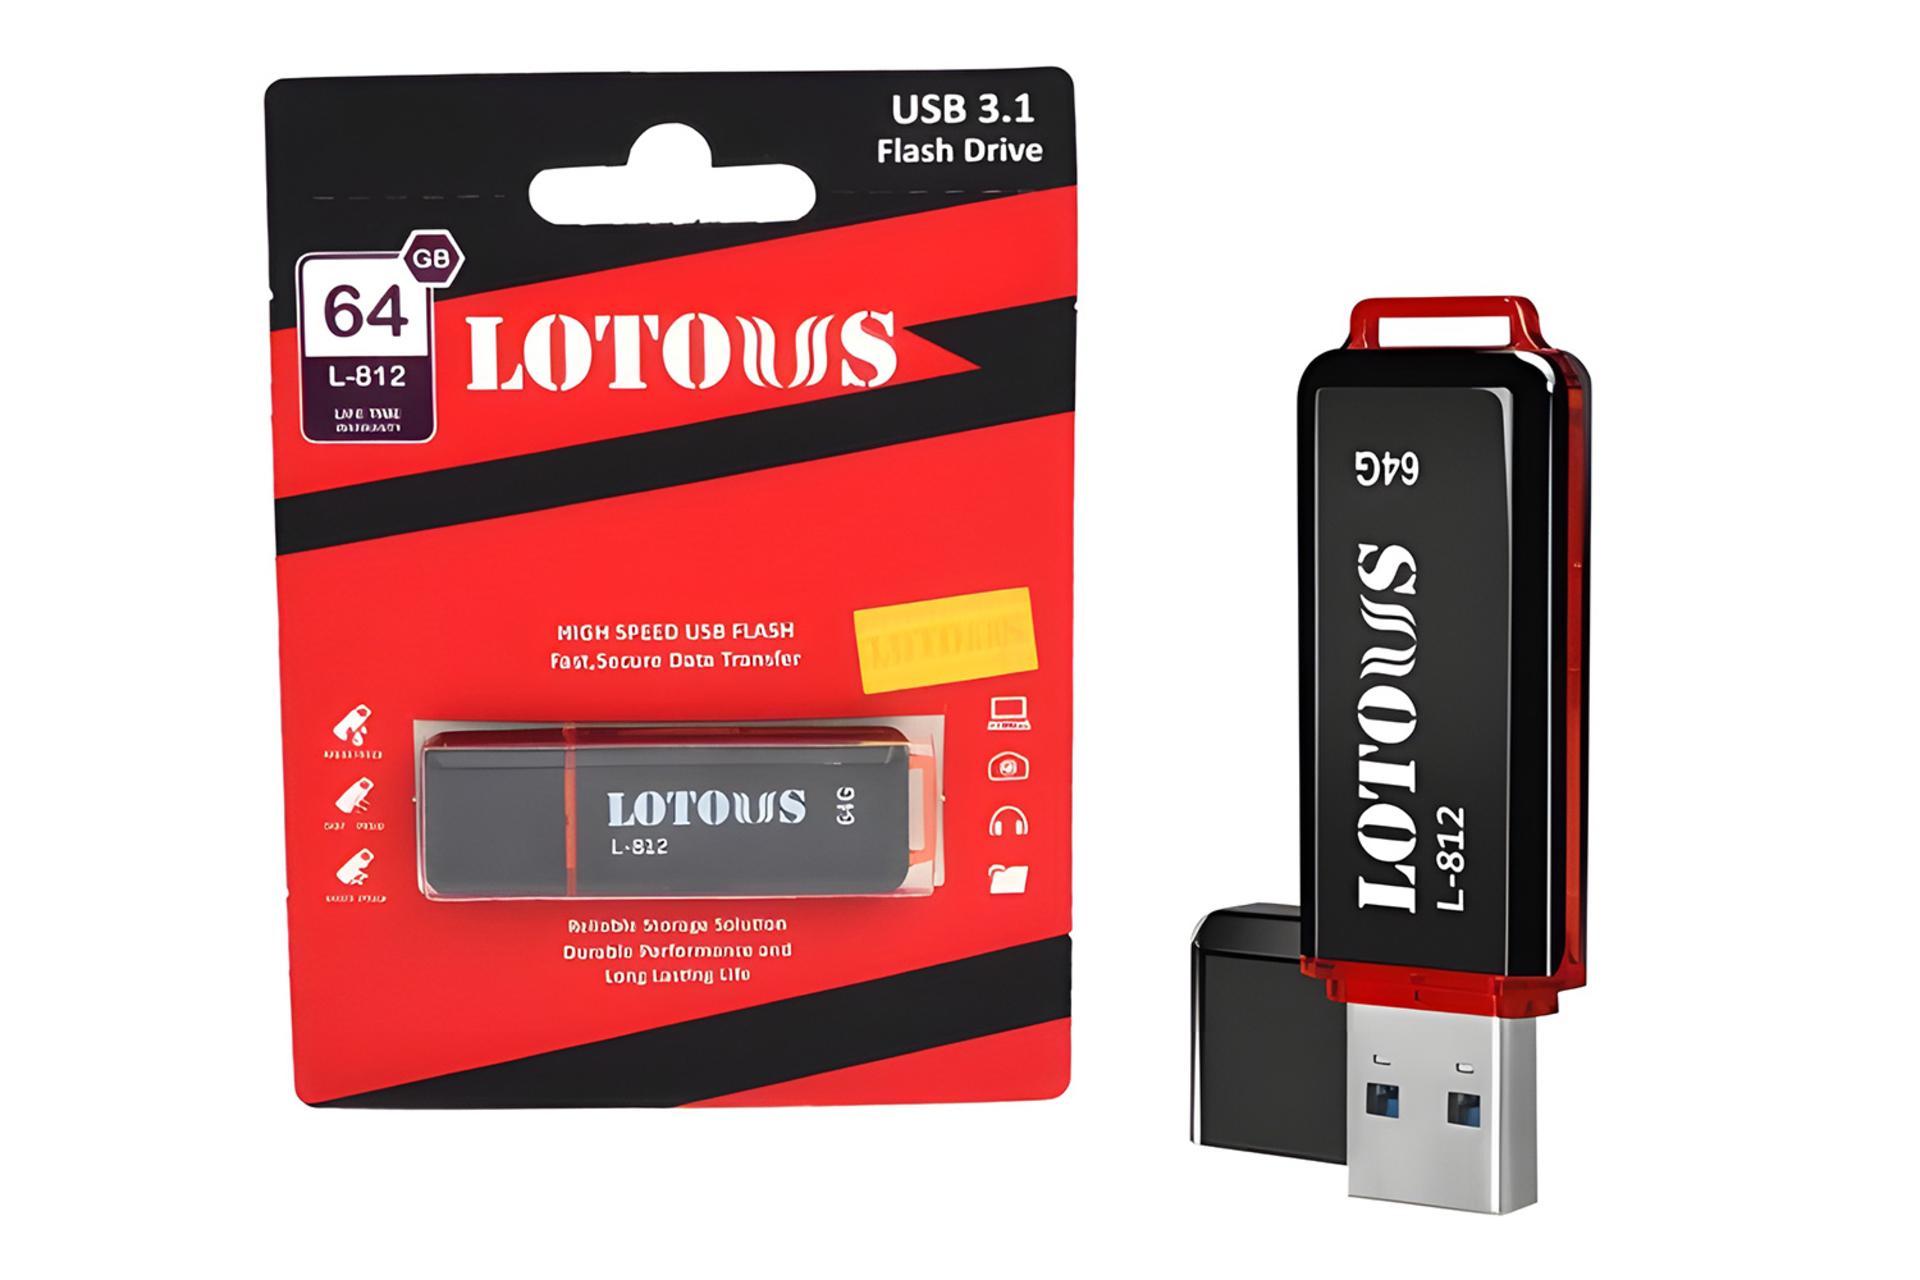 جعبه فلش مموری لوتوس Lotous L-812 64GB USB 3.1